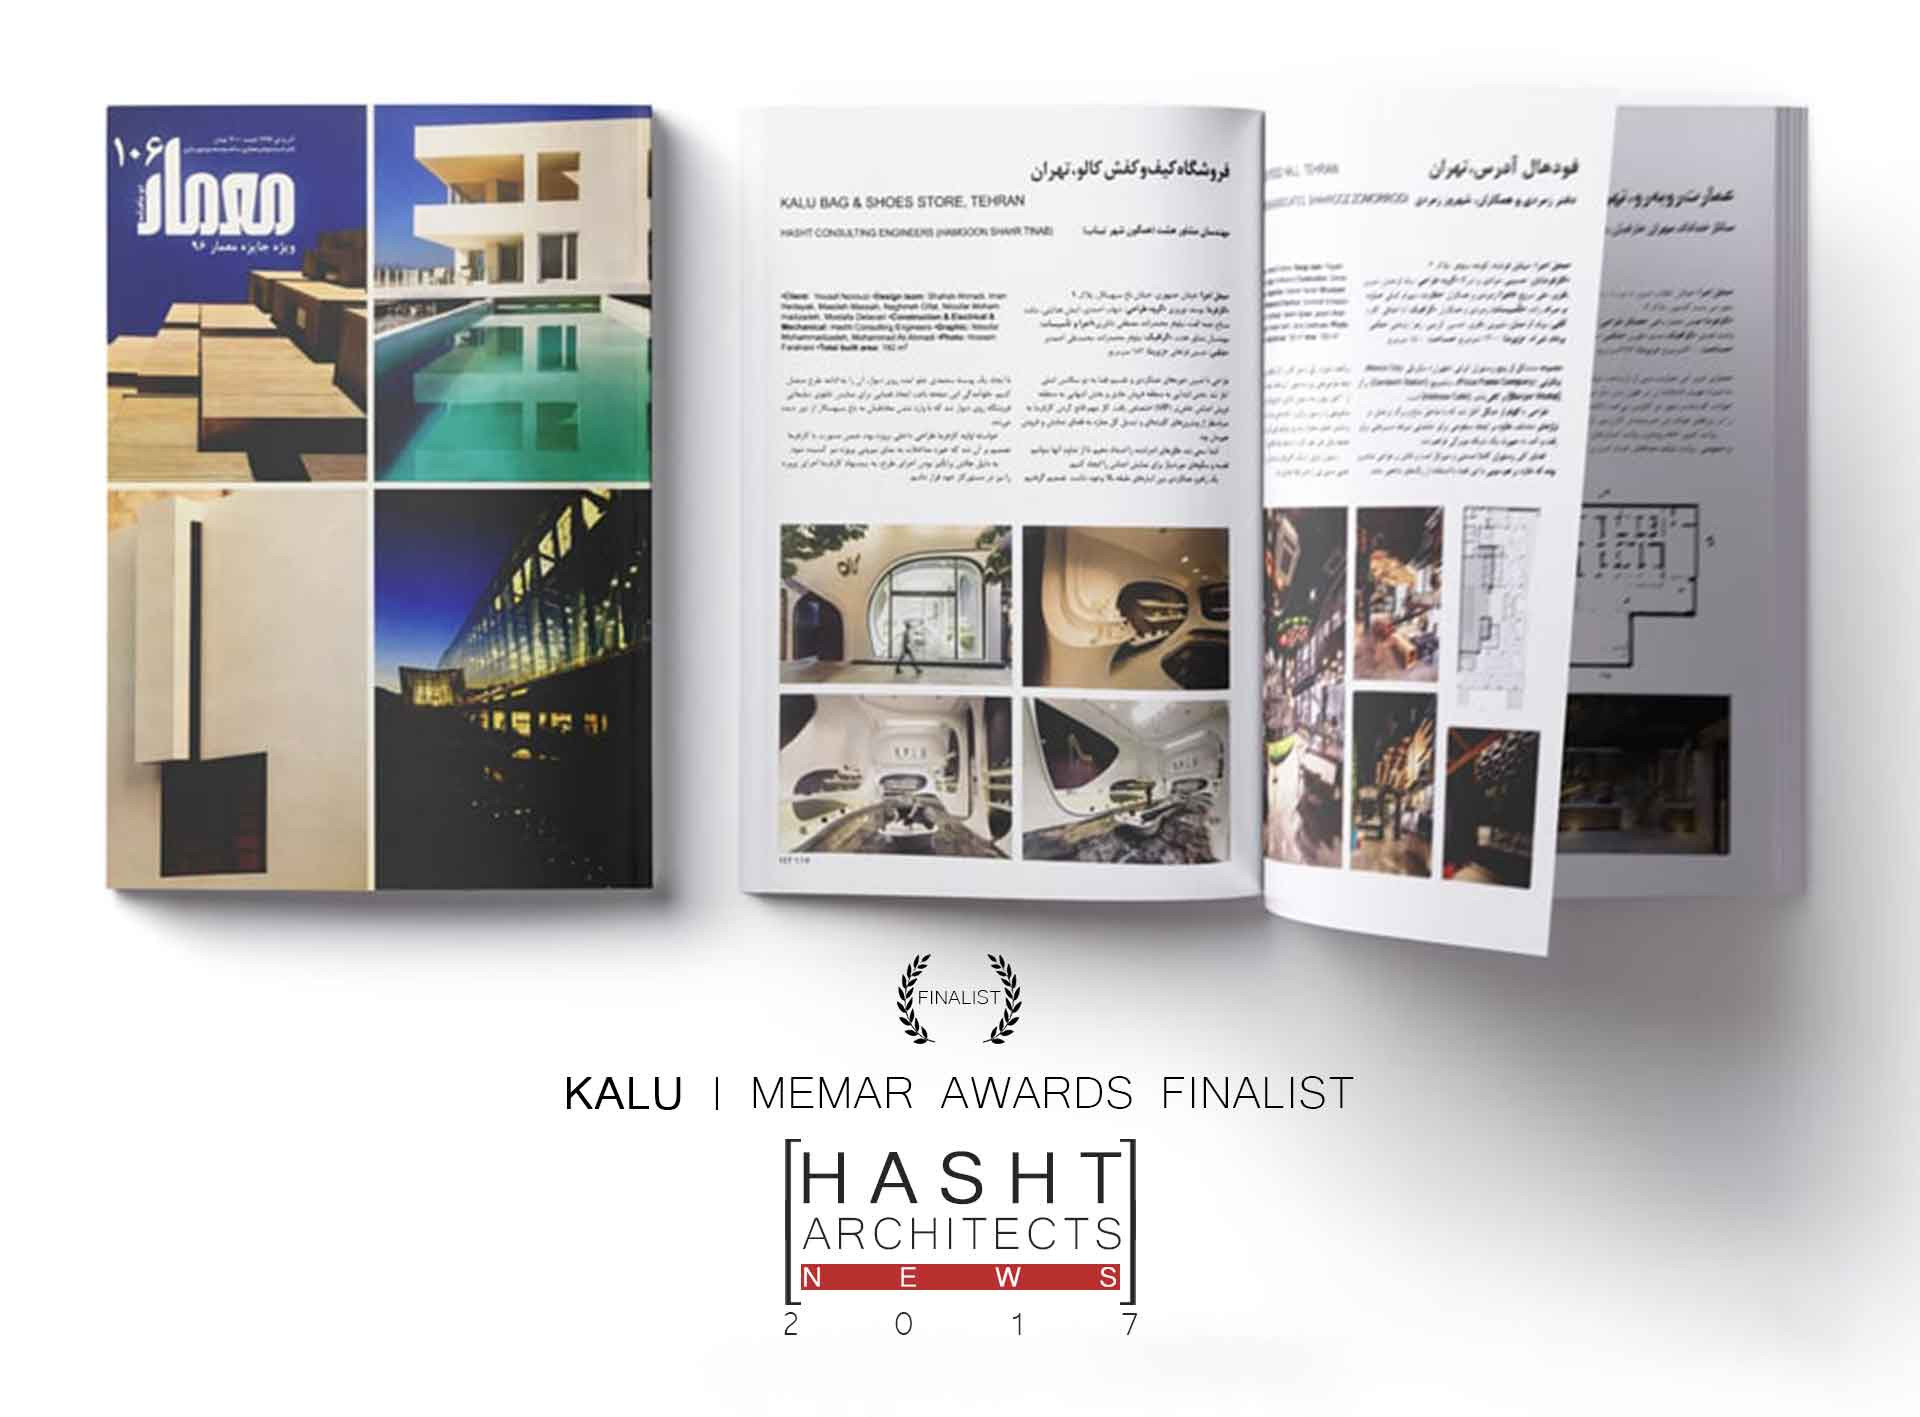 Kalu Store; Memar Award Finalist of 2017